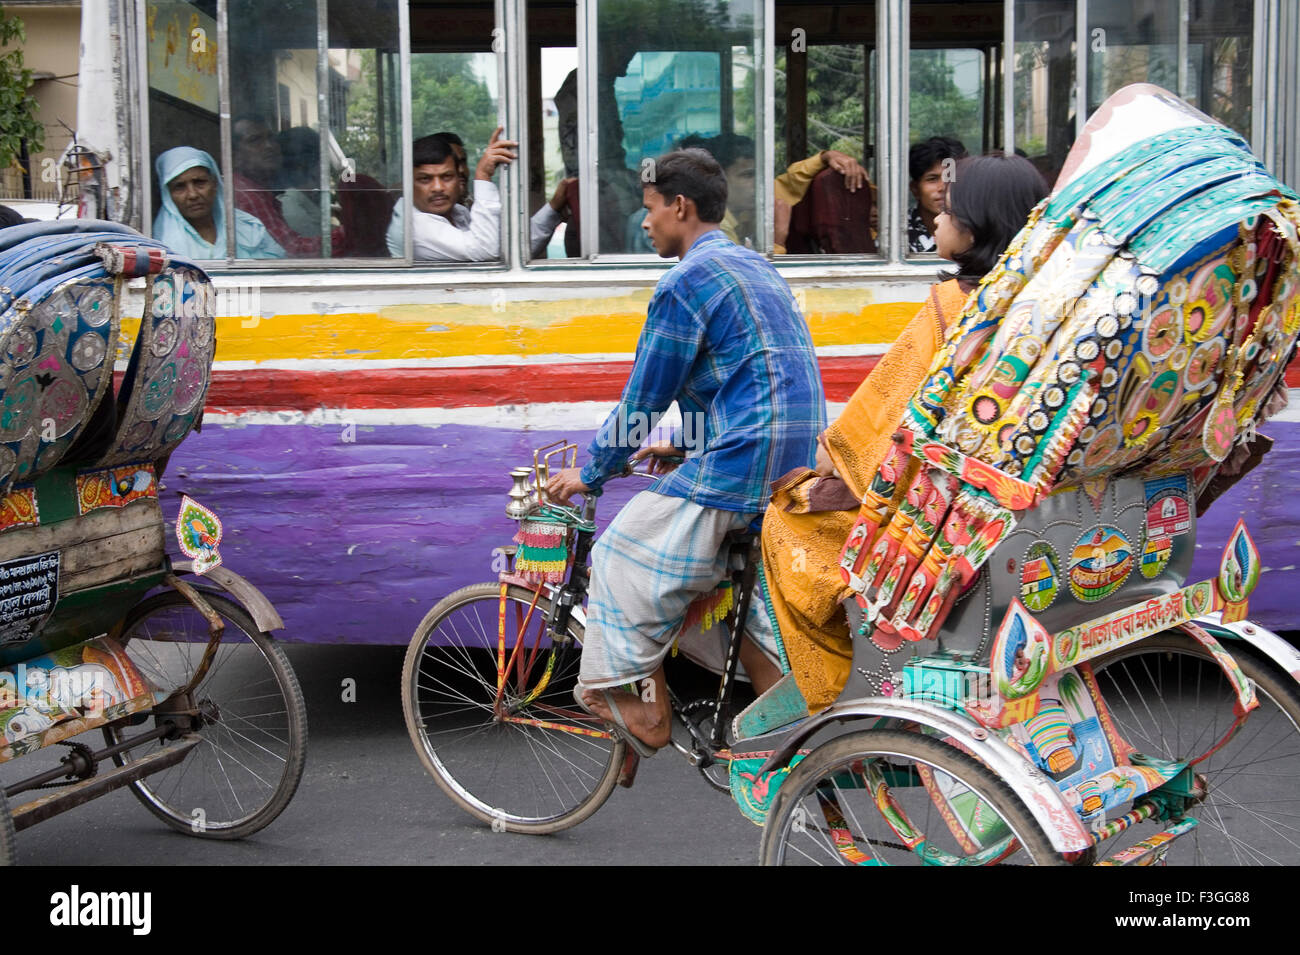 Straße Verkehr bus Dreirad Rikscha Dhaka, Bangladesch - rsc 109846 Stockfoto